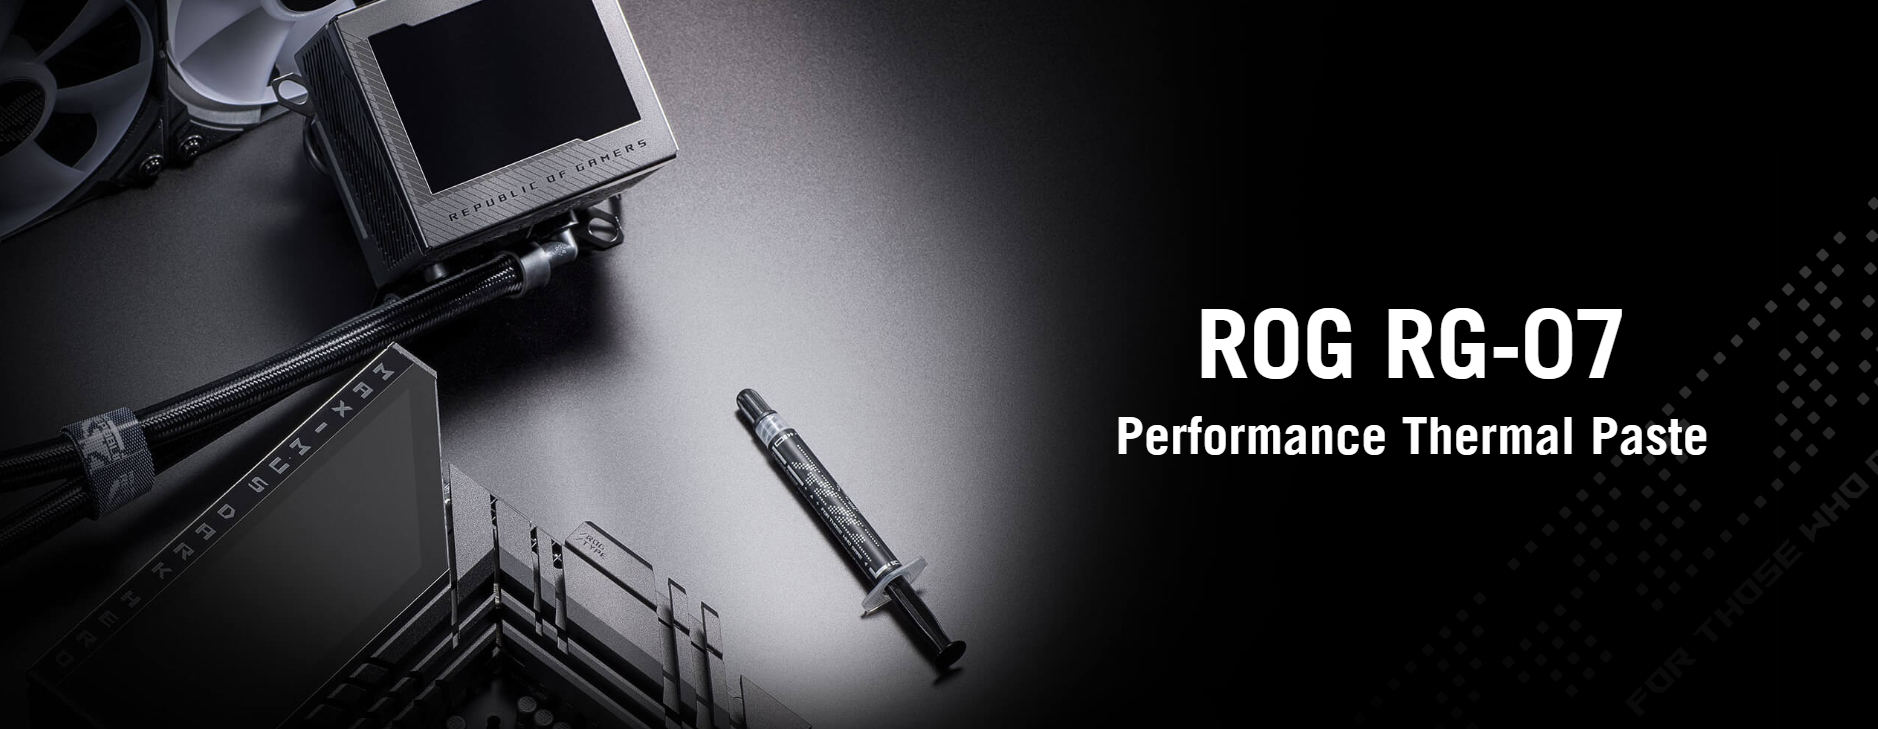 ROG RG-07 Performance Thermal Paste